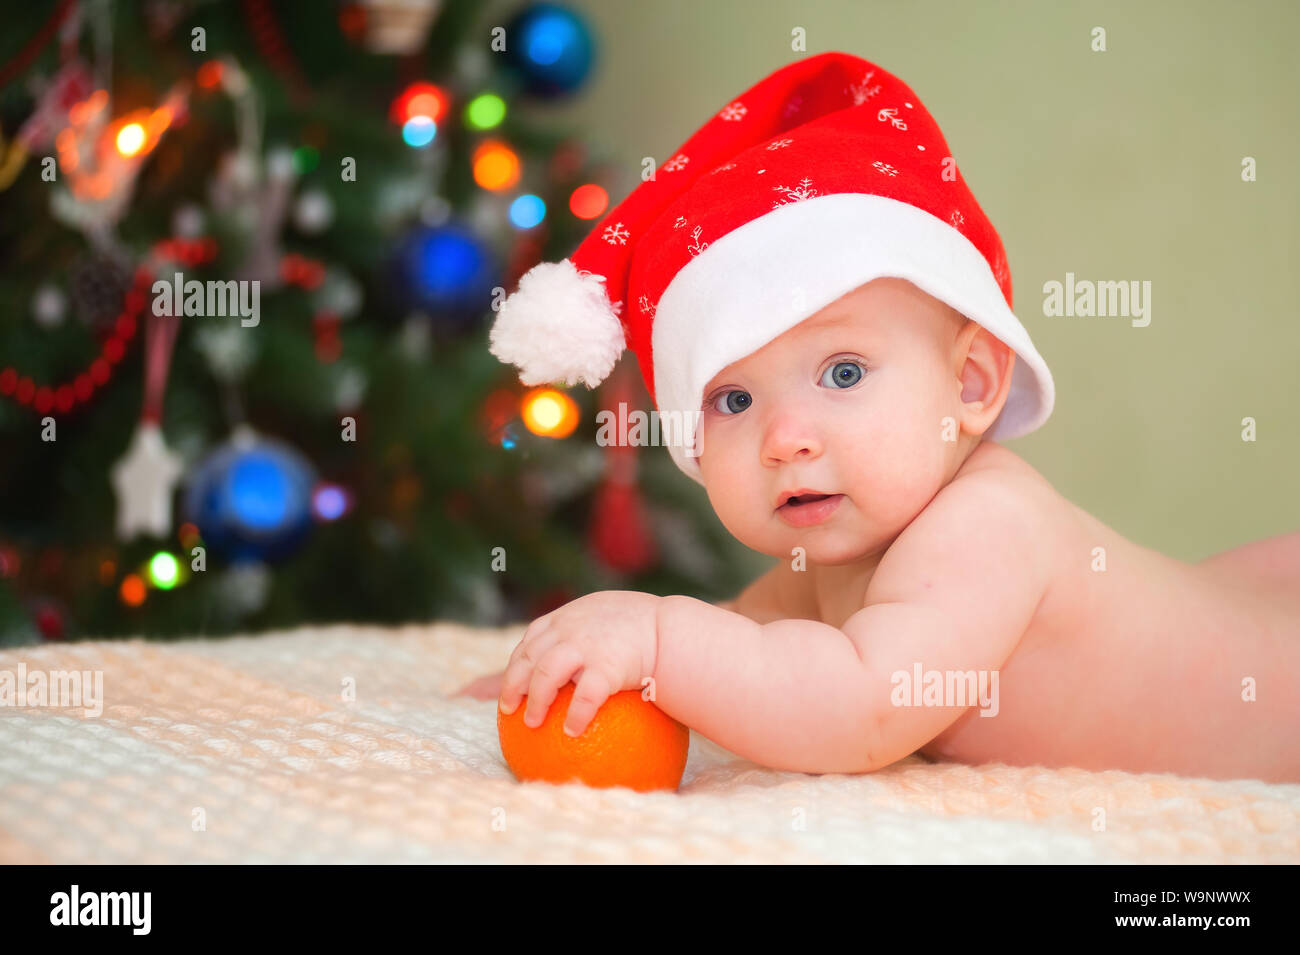 Newborn baby lying on Christmas tree background with orange. Lying on his stomach with an orange. Xmas holiday. Child costume. Santa boy. Christmas tr Stock Photo